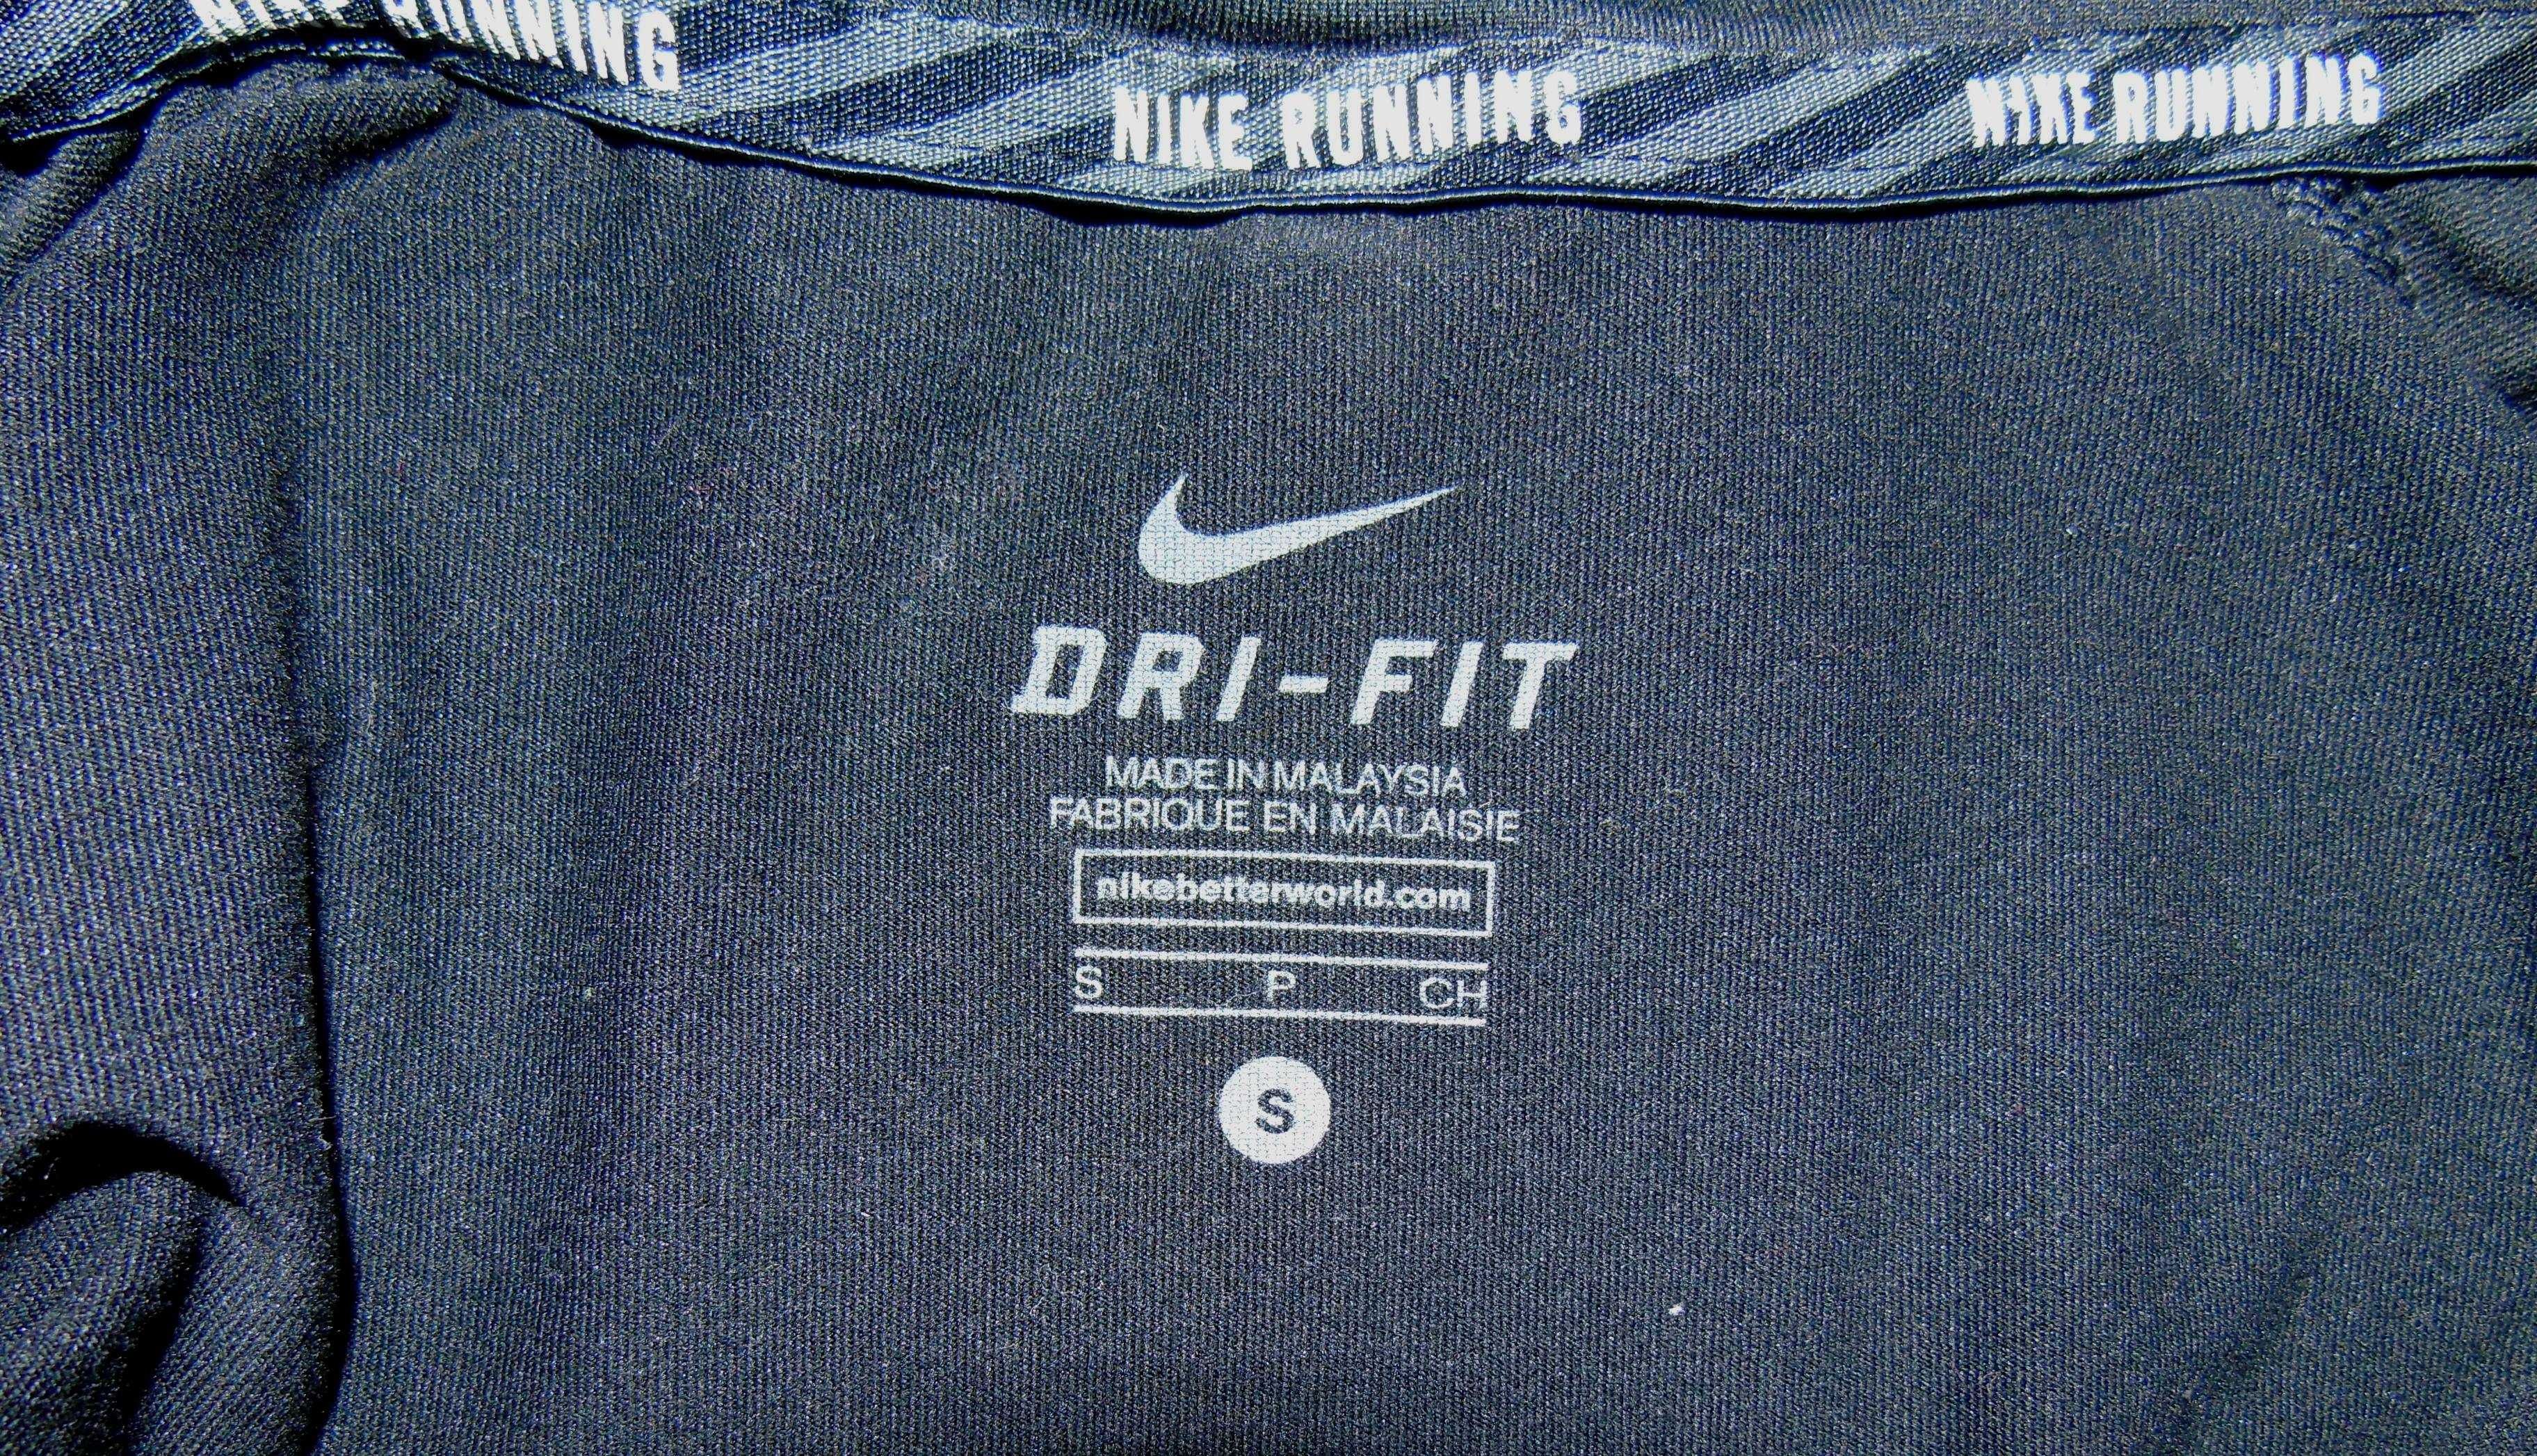 Nike Running cienka bluza do biegania S